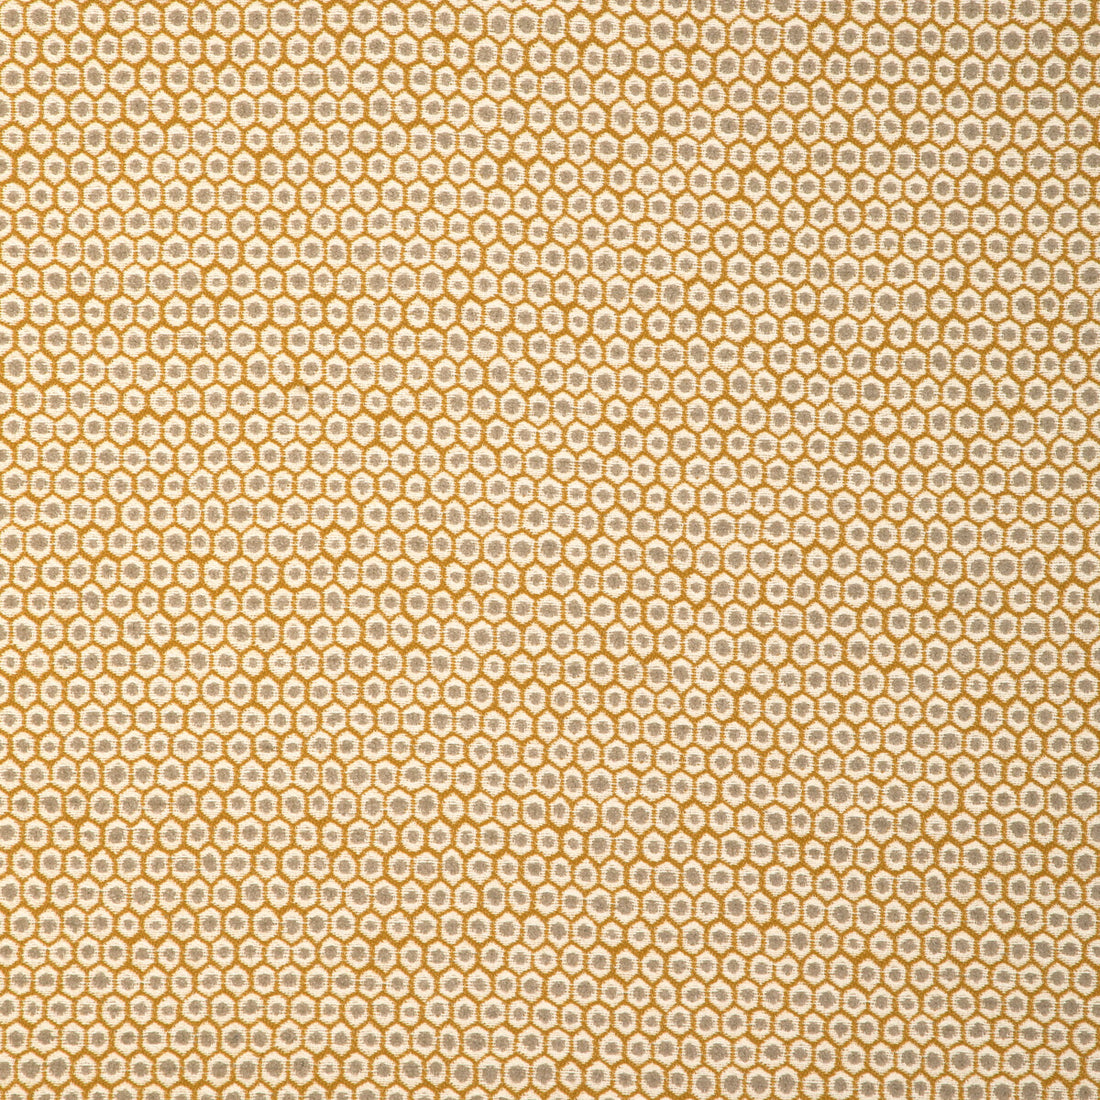 Kravet Smart fabric in 37004-411 color - pattern 37004.411.0 - by Kravet Smart in the Pavilion collection